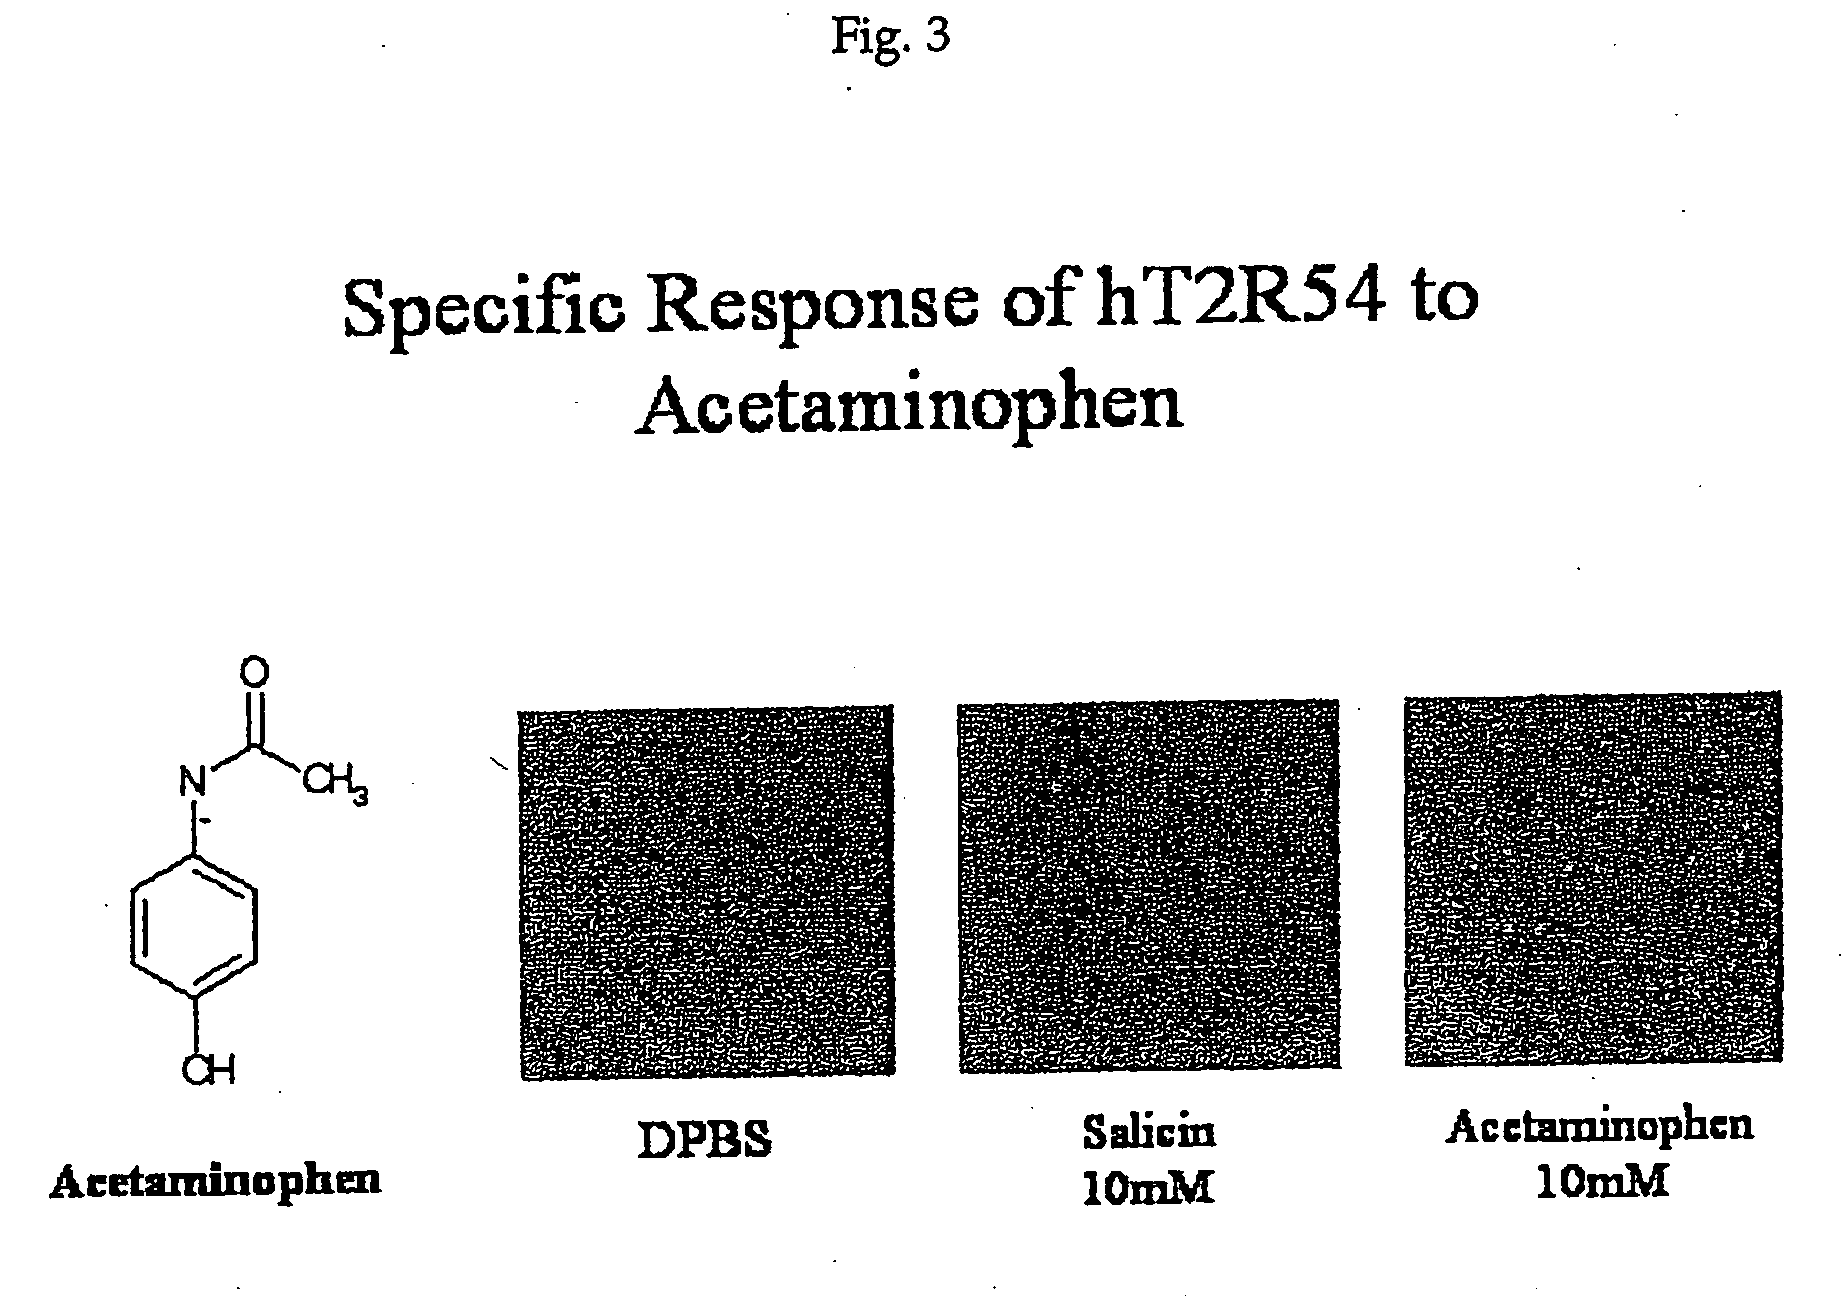 pHuman T2R receptors for acetaminophen ranitidine, strychnine and denatomium and related assays for identifying human bitter taste modulators